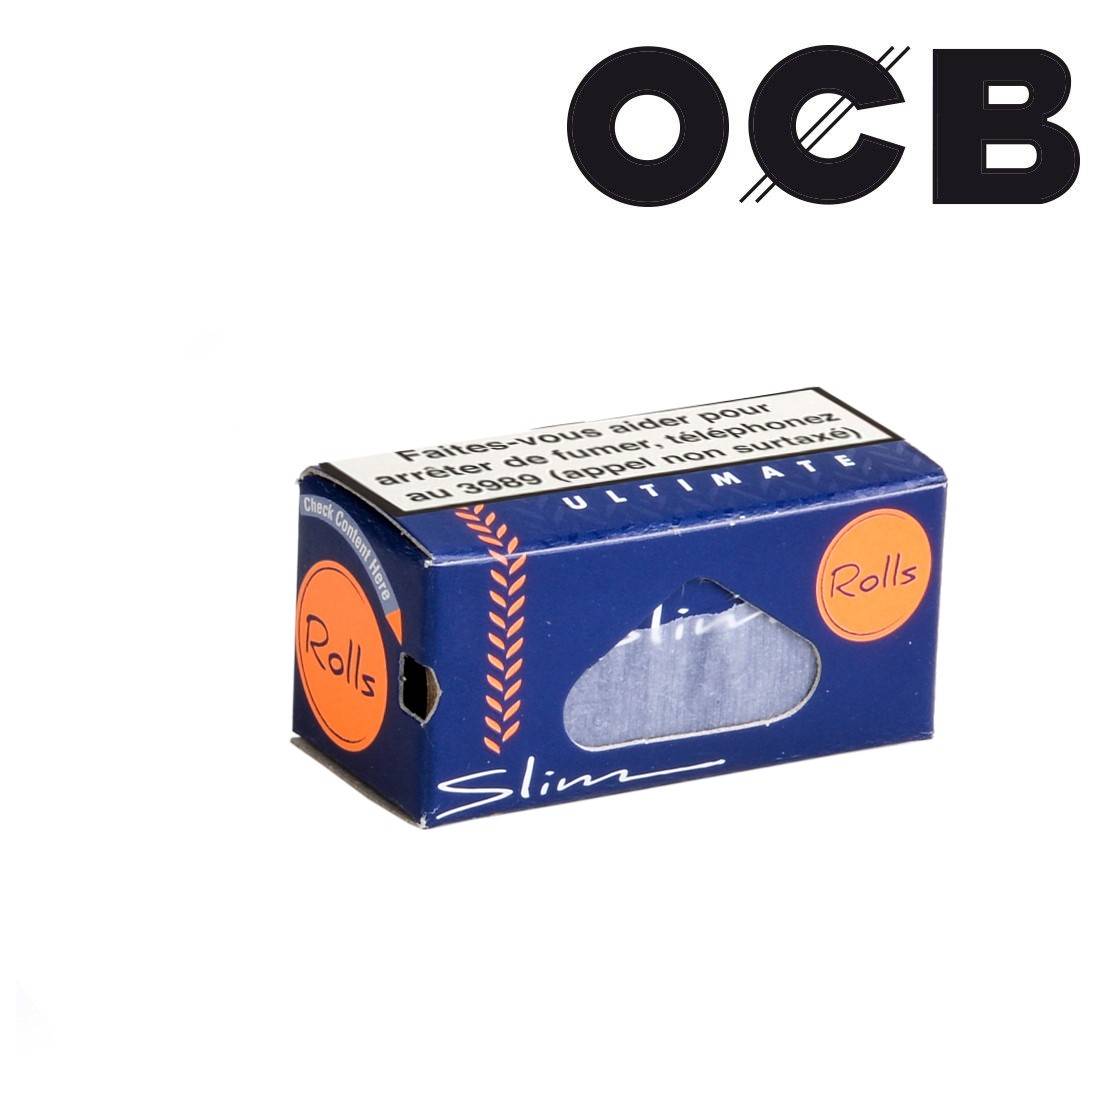 OCB Slim Rolls Ultimate x 6 Rouleau neuf dans le carton d'origine 